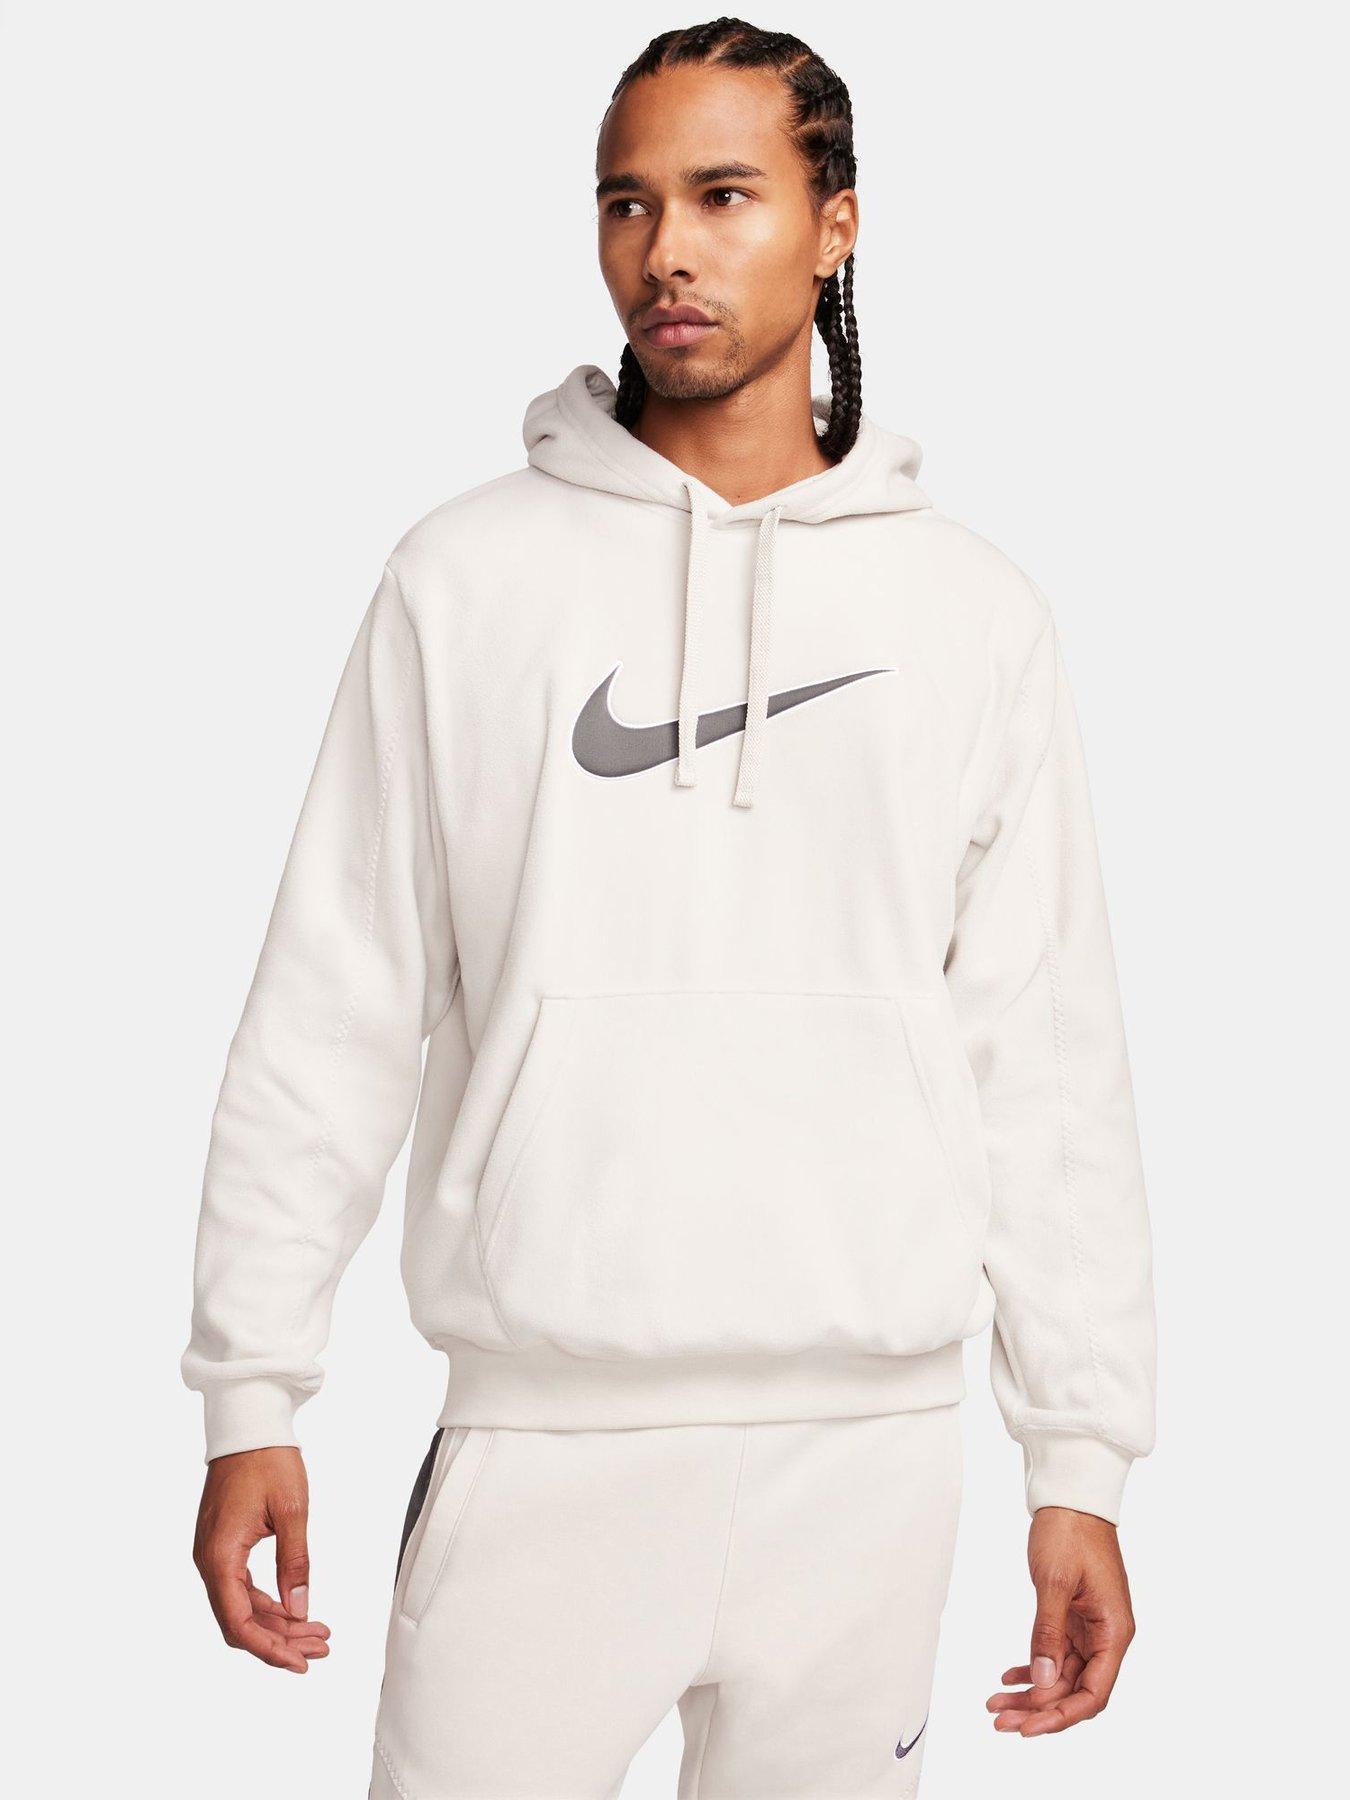 Nike Zeus Tape Fleece Club Tracksuit Hoodie Joggers Sweatpants Set - Grey